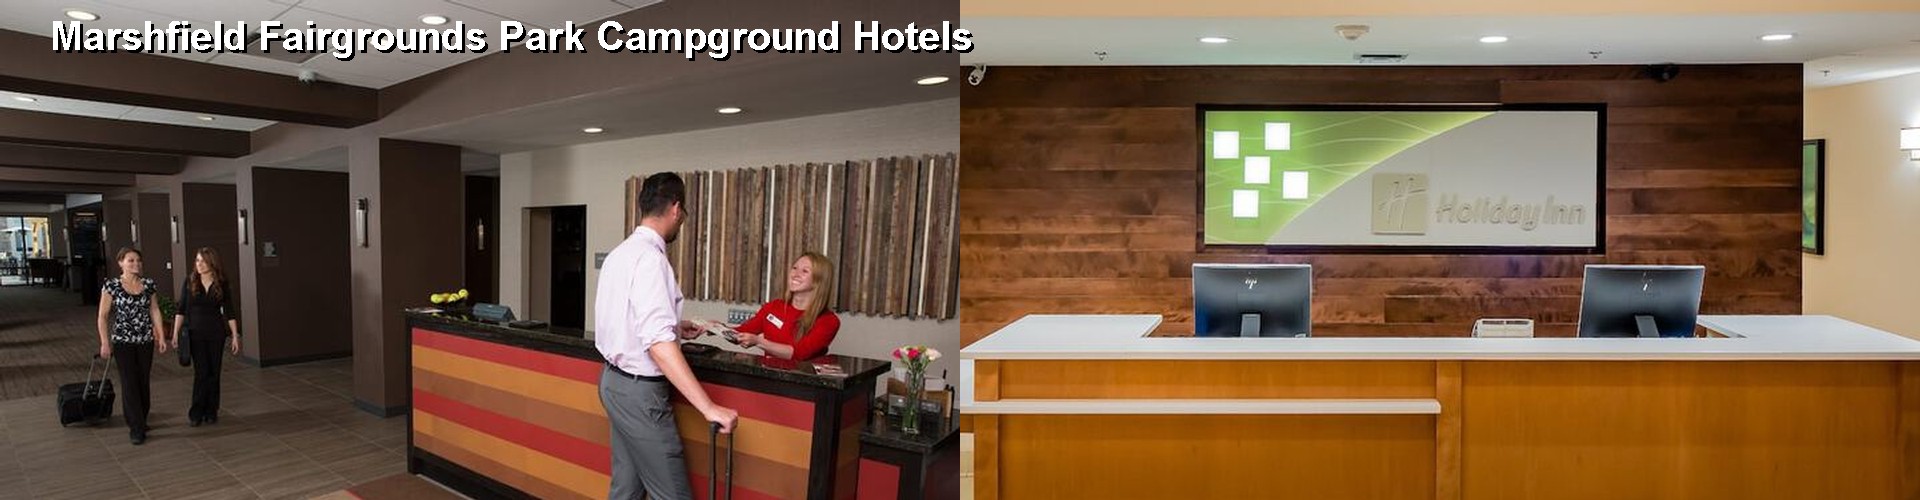 4 Best Hotels near Marshfield Fairgrounds Park Campground